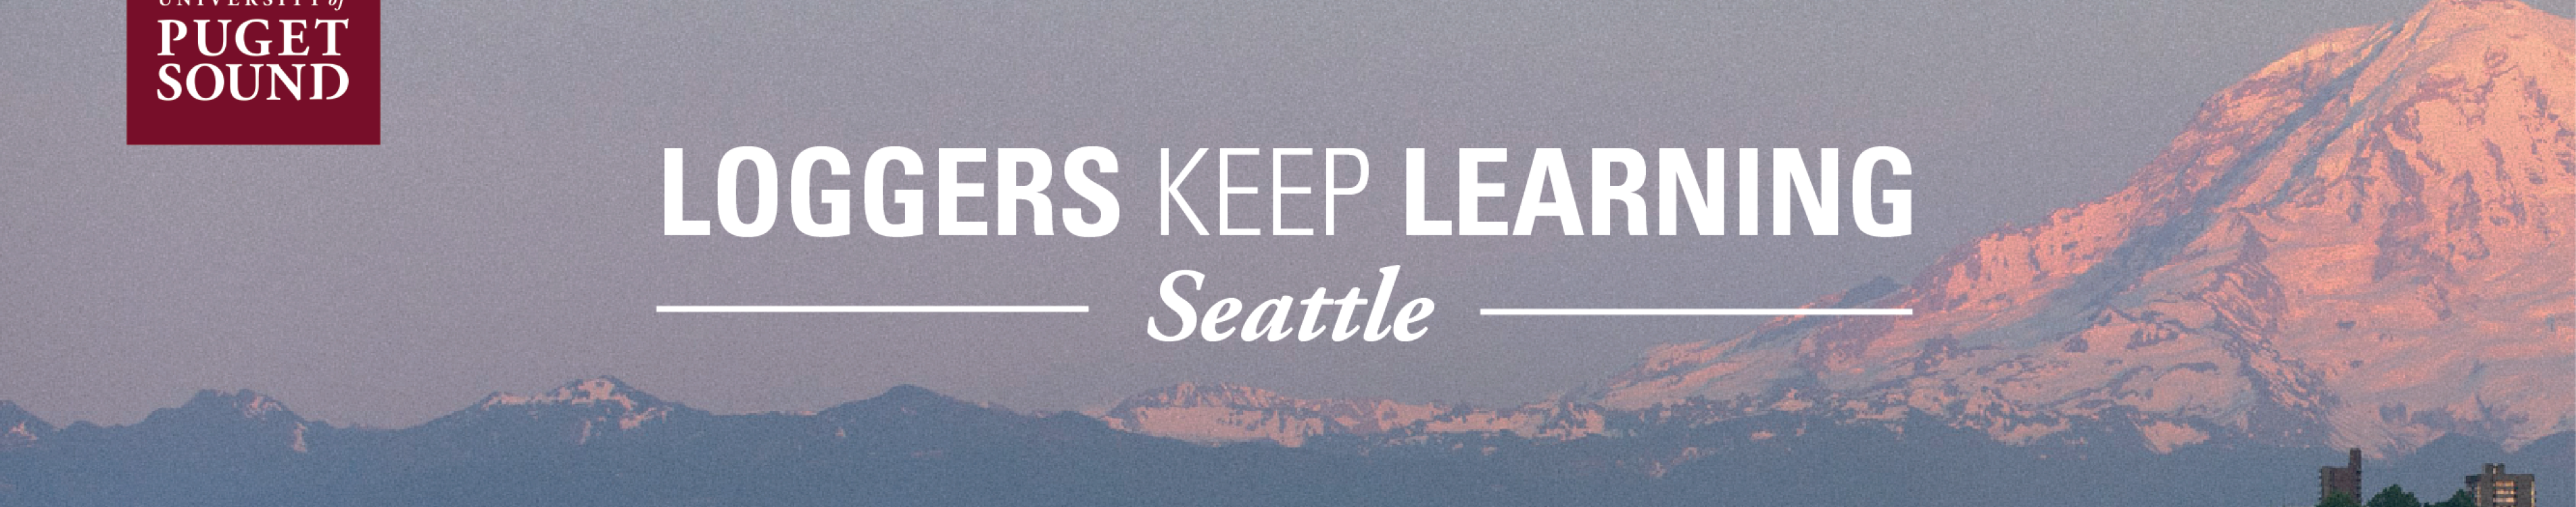 Loggers Keep Learning Seattle